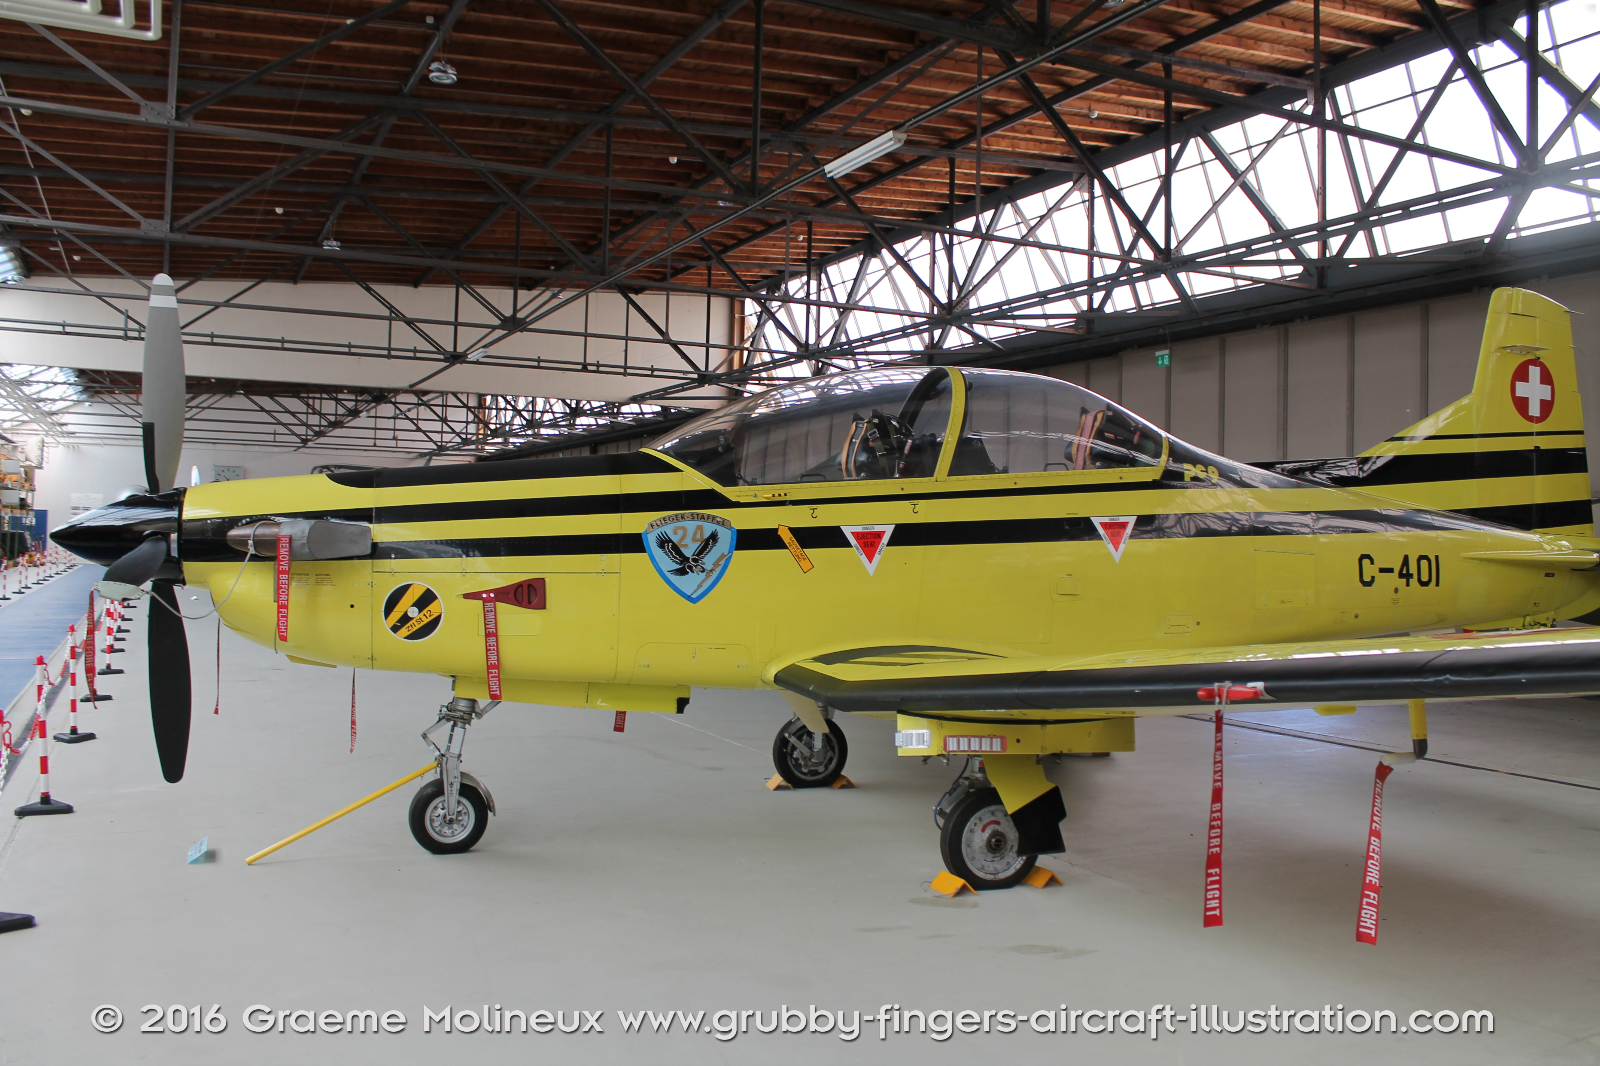 PILATUS_PC-9_C-401_Swiss_Air_Force_Museum_2015_01_GrubbyFingers